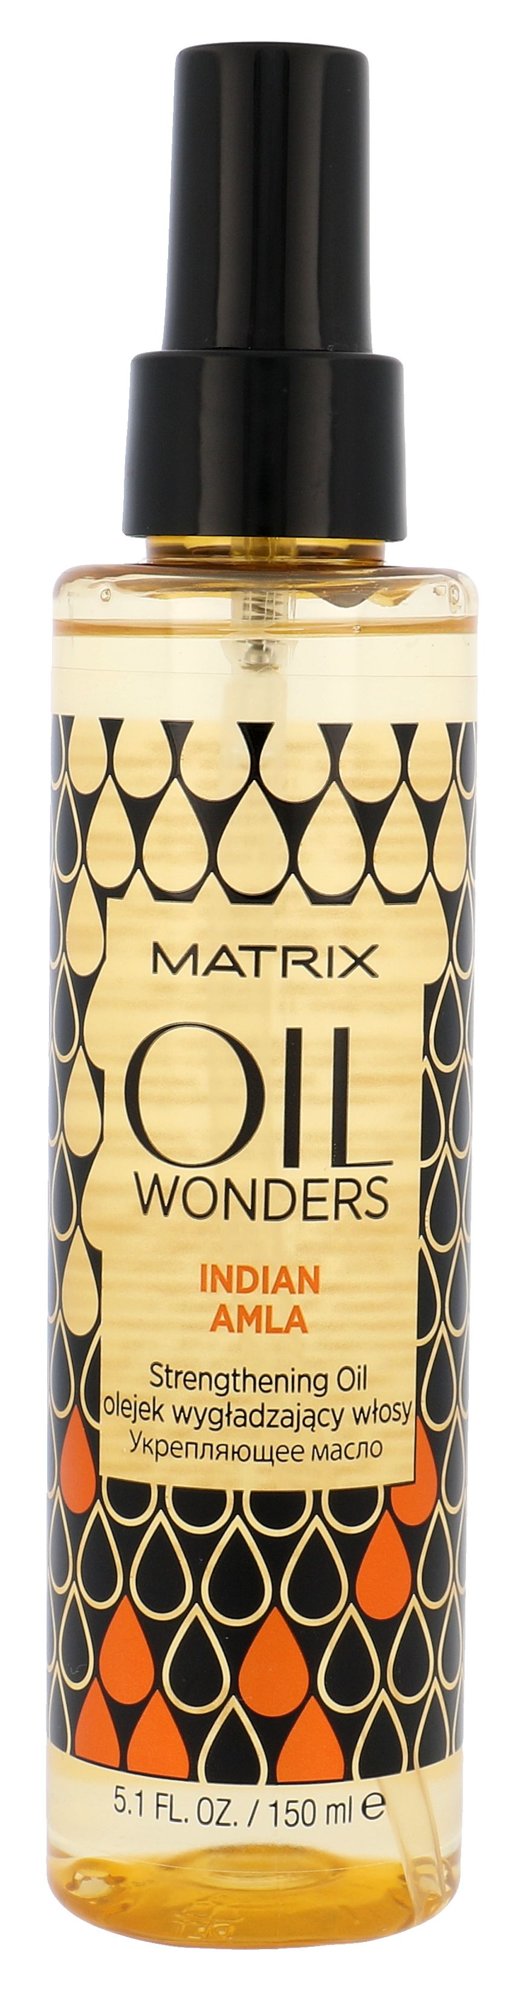 Matrix Oil Wonders Indian Amla